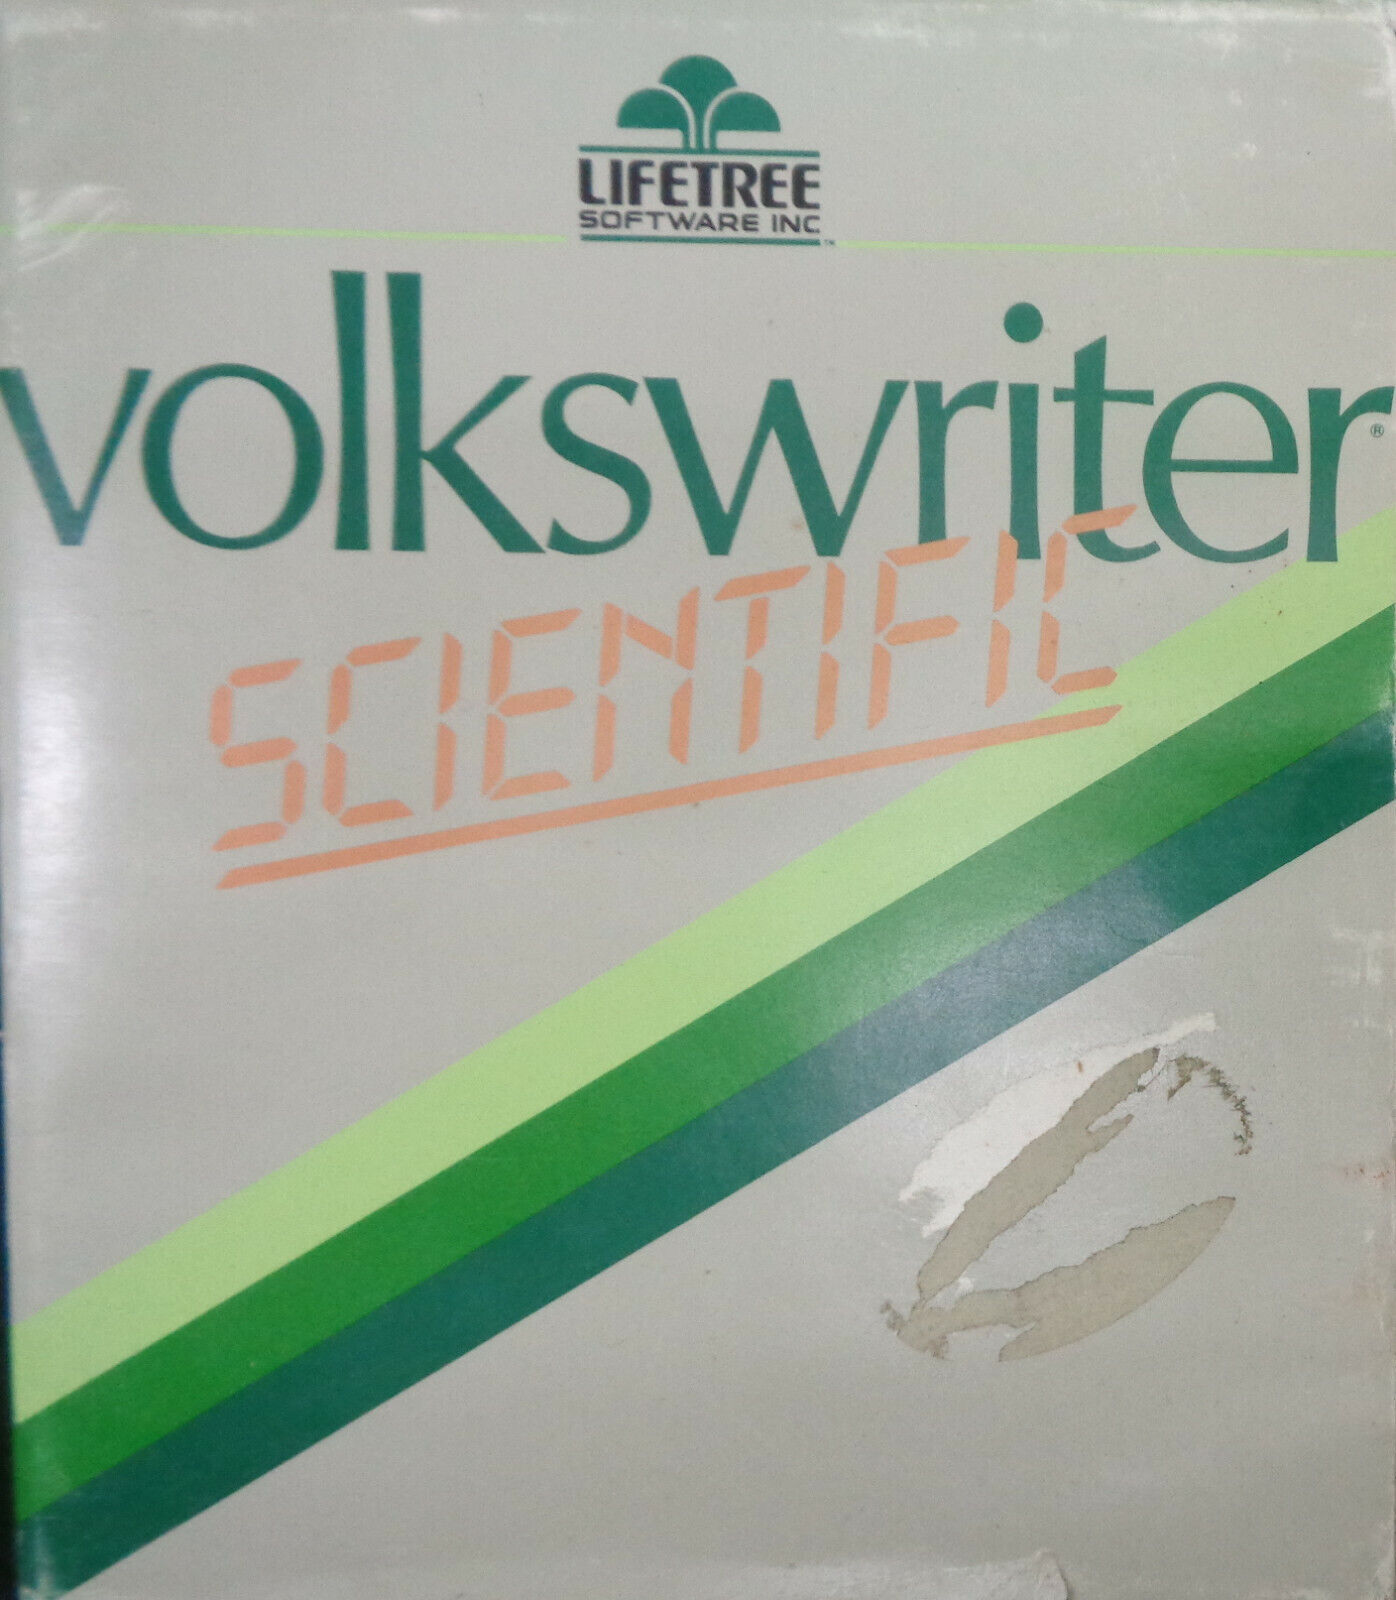 Volkswriter Scientific by Lifetree Software 1984. Science word processor. IBM